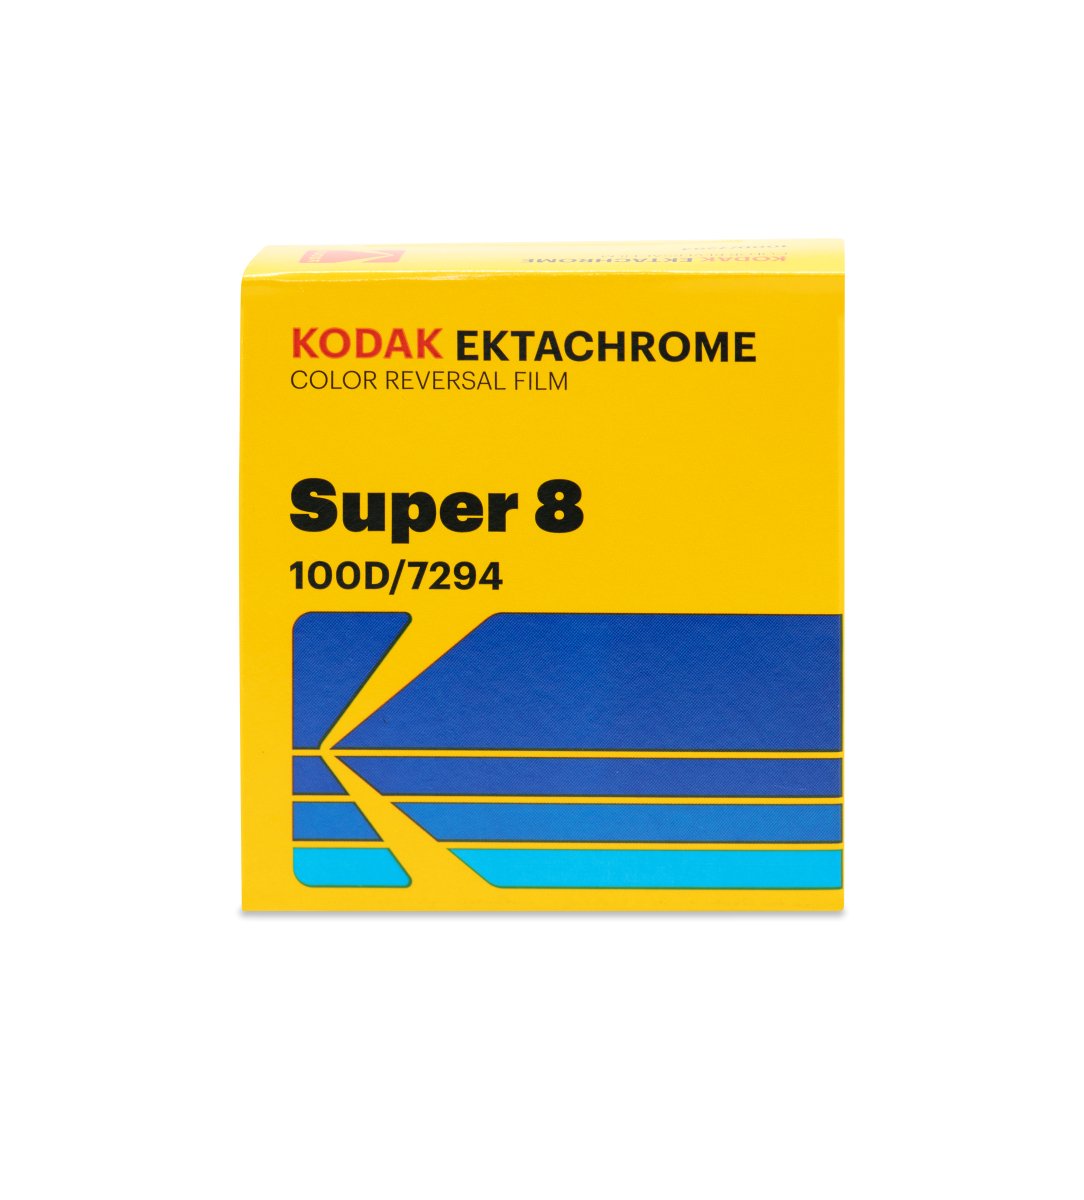 Kodak Film Ektachrome 100D Color Transparency Film - Super 8 - 50' Roll - Rewind Photo Lab - Kodak